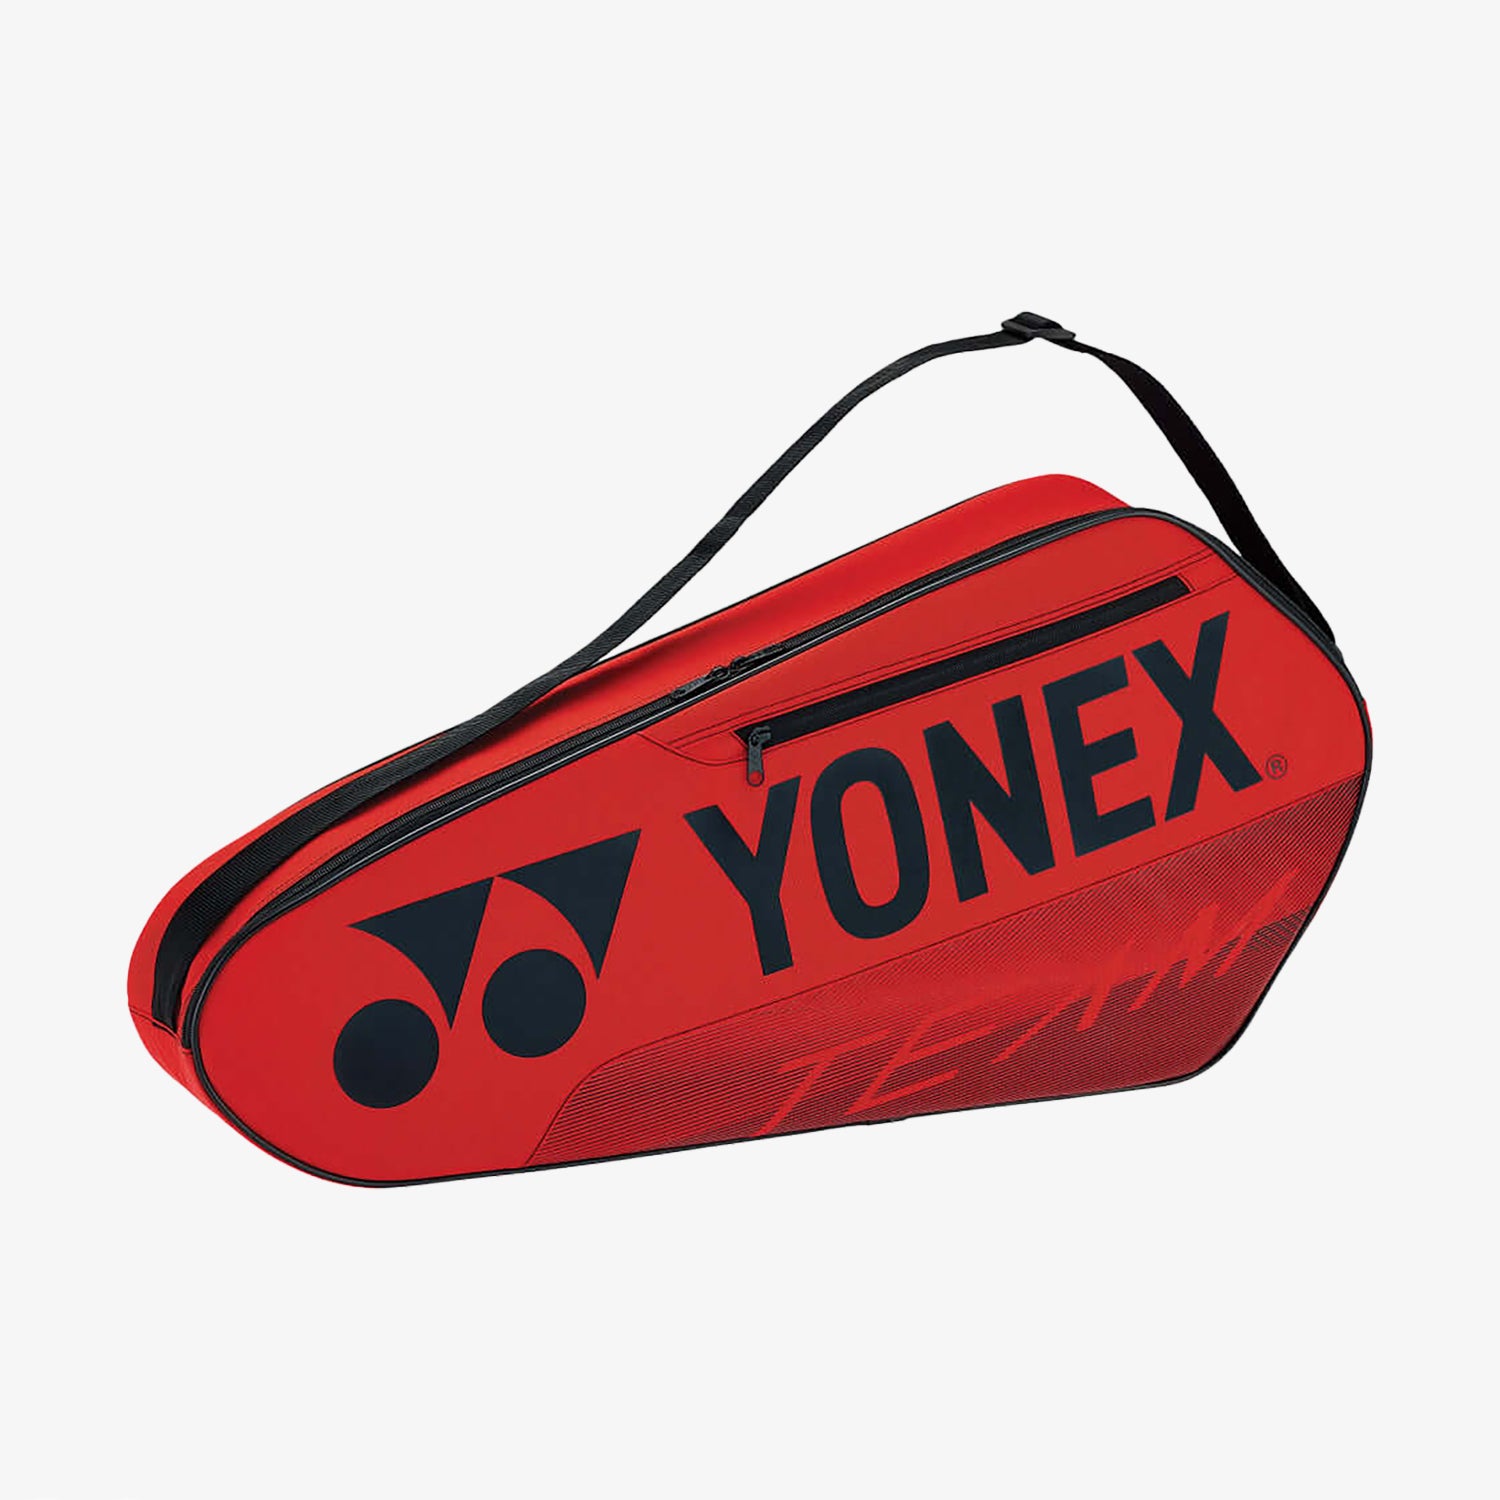 Yonex 42123 (Red) 3pk Team Badminton Tennis Racket Bag